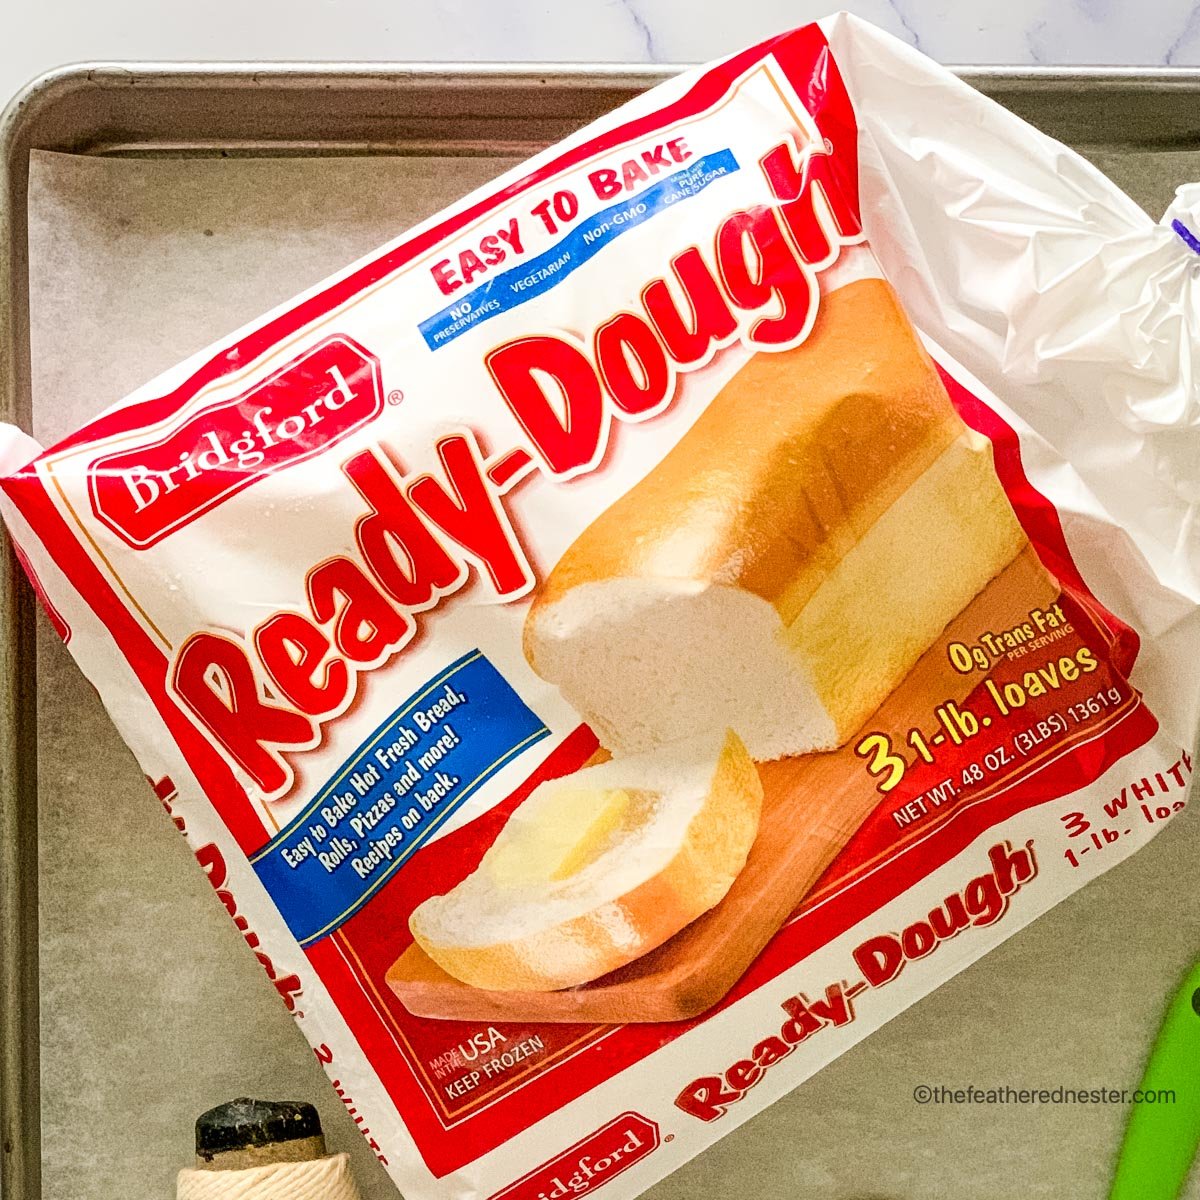 A package of Bridgford ready-dough.